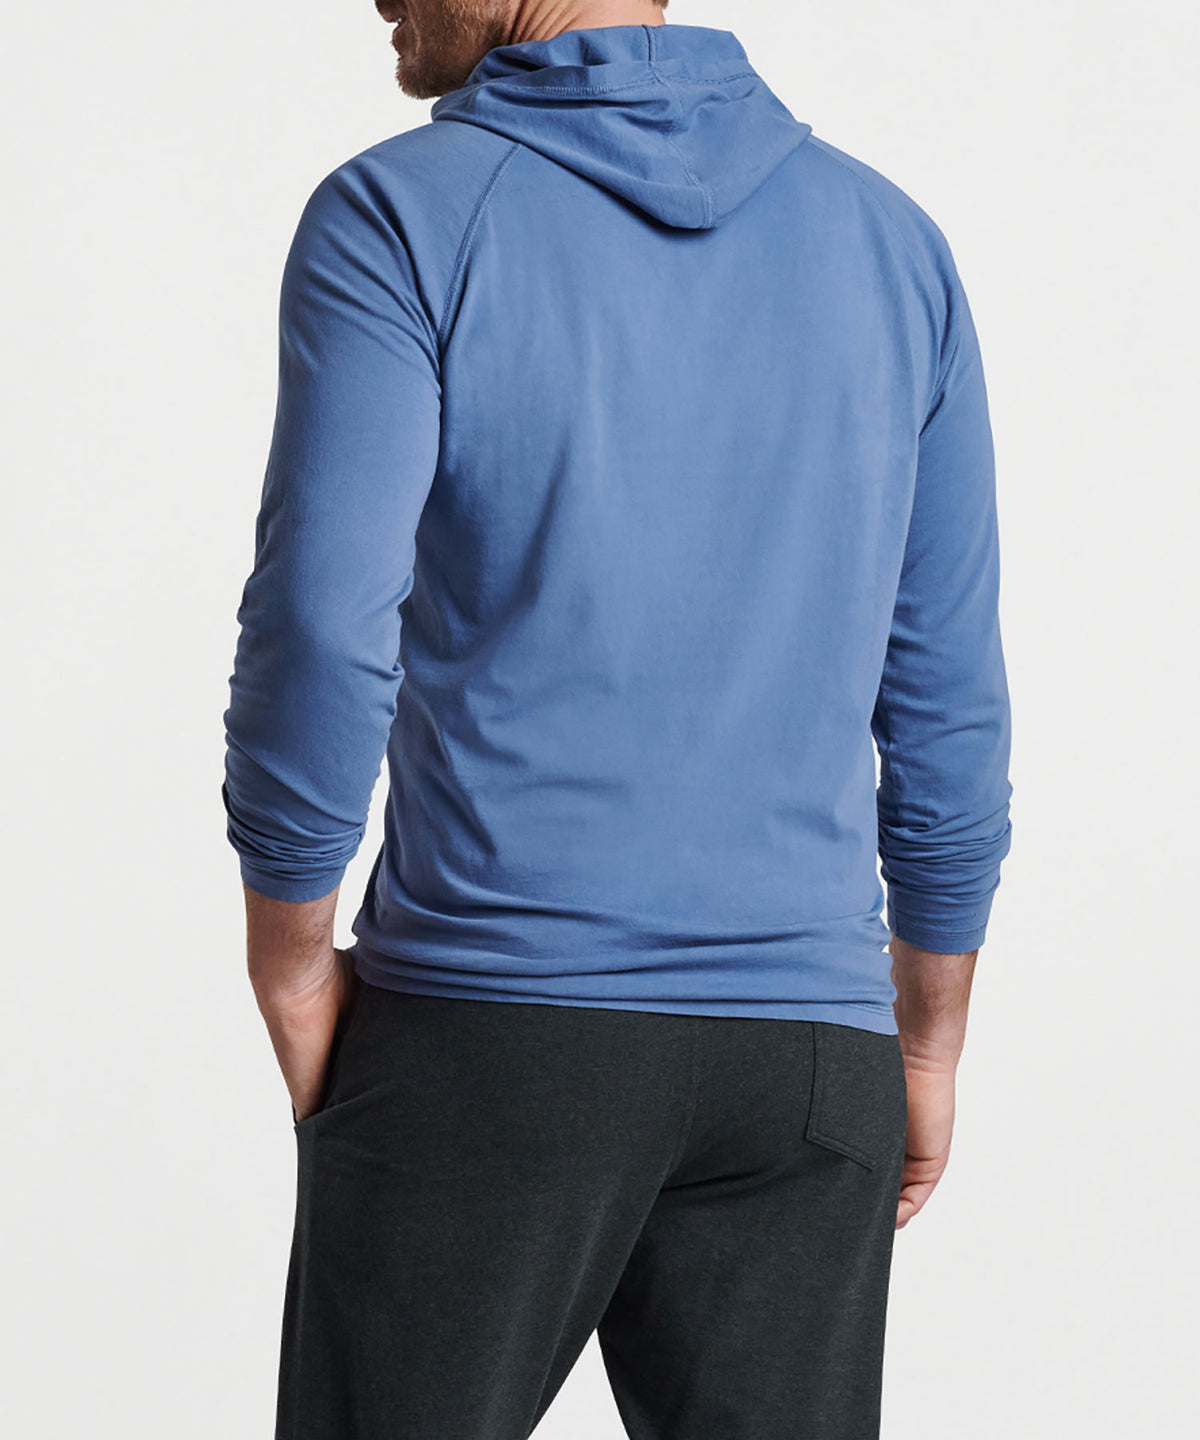 Peter Millar Long Sleeve Lava Wash Pullover Hoodie, Men's Big & Tall